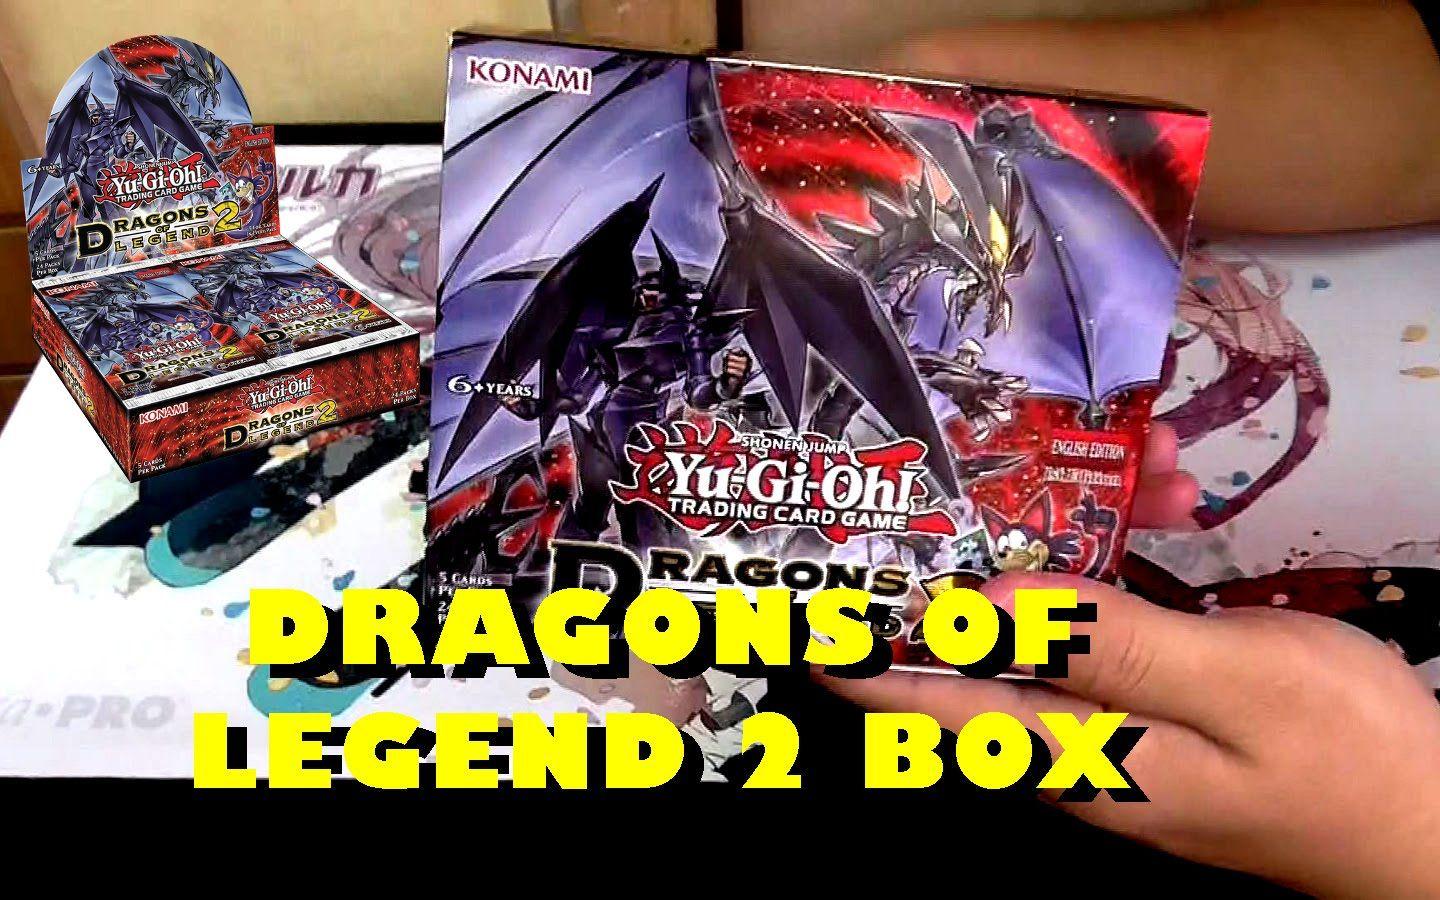 Yugioh DRAGONS OF LEGEND 2 Box Opening! Toons, Legendary Dragons